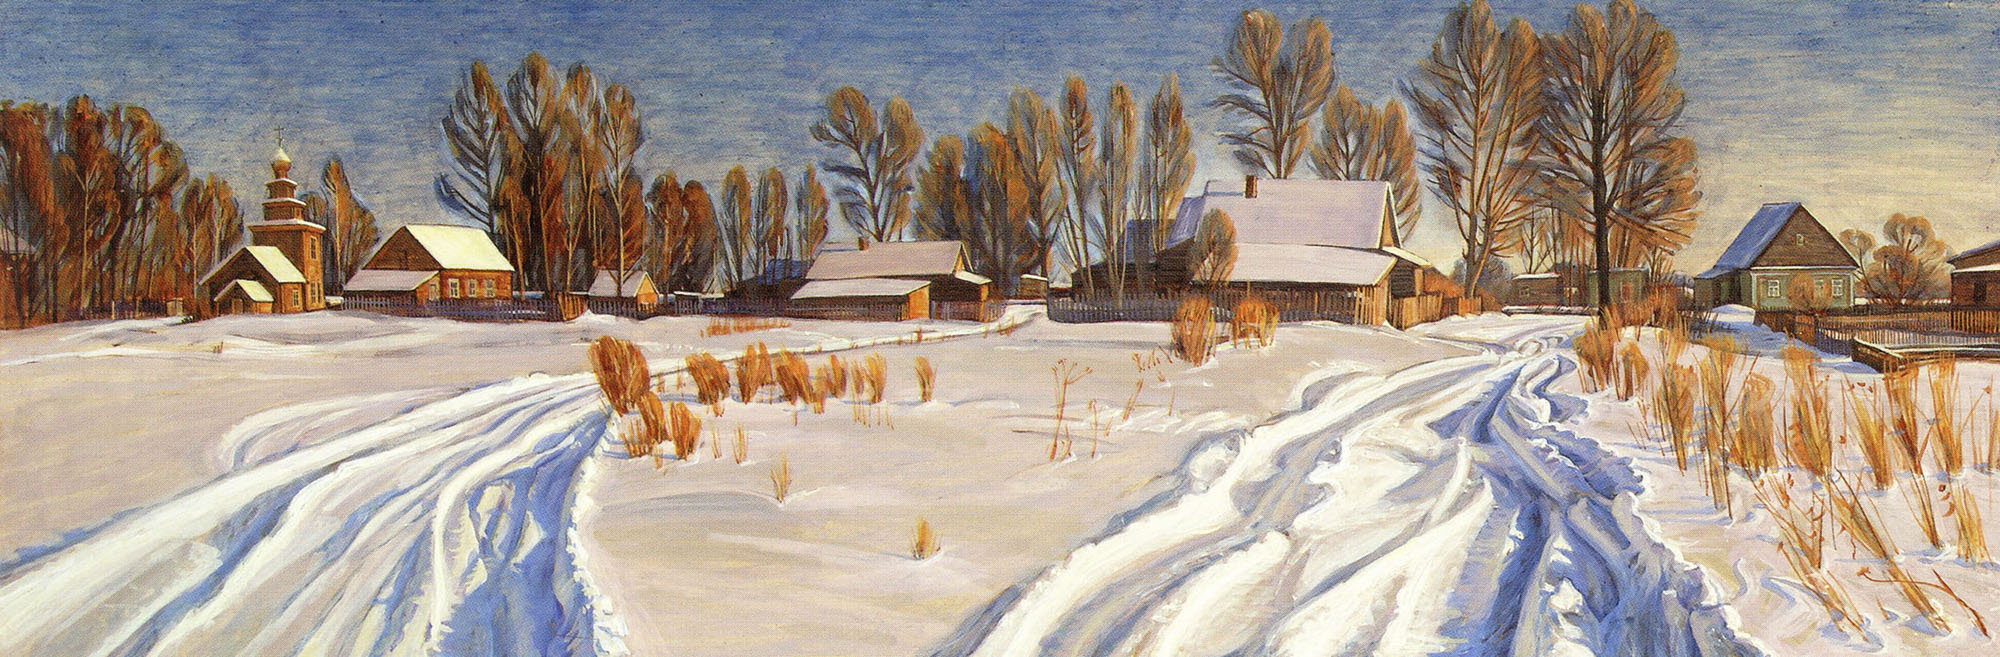 Е. Кошевая. Зима в деревне. 2001.